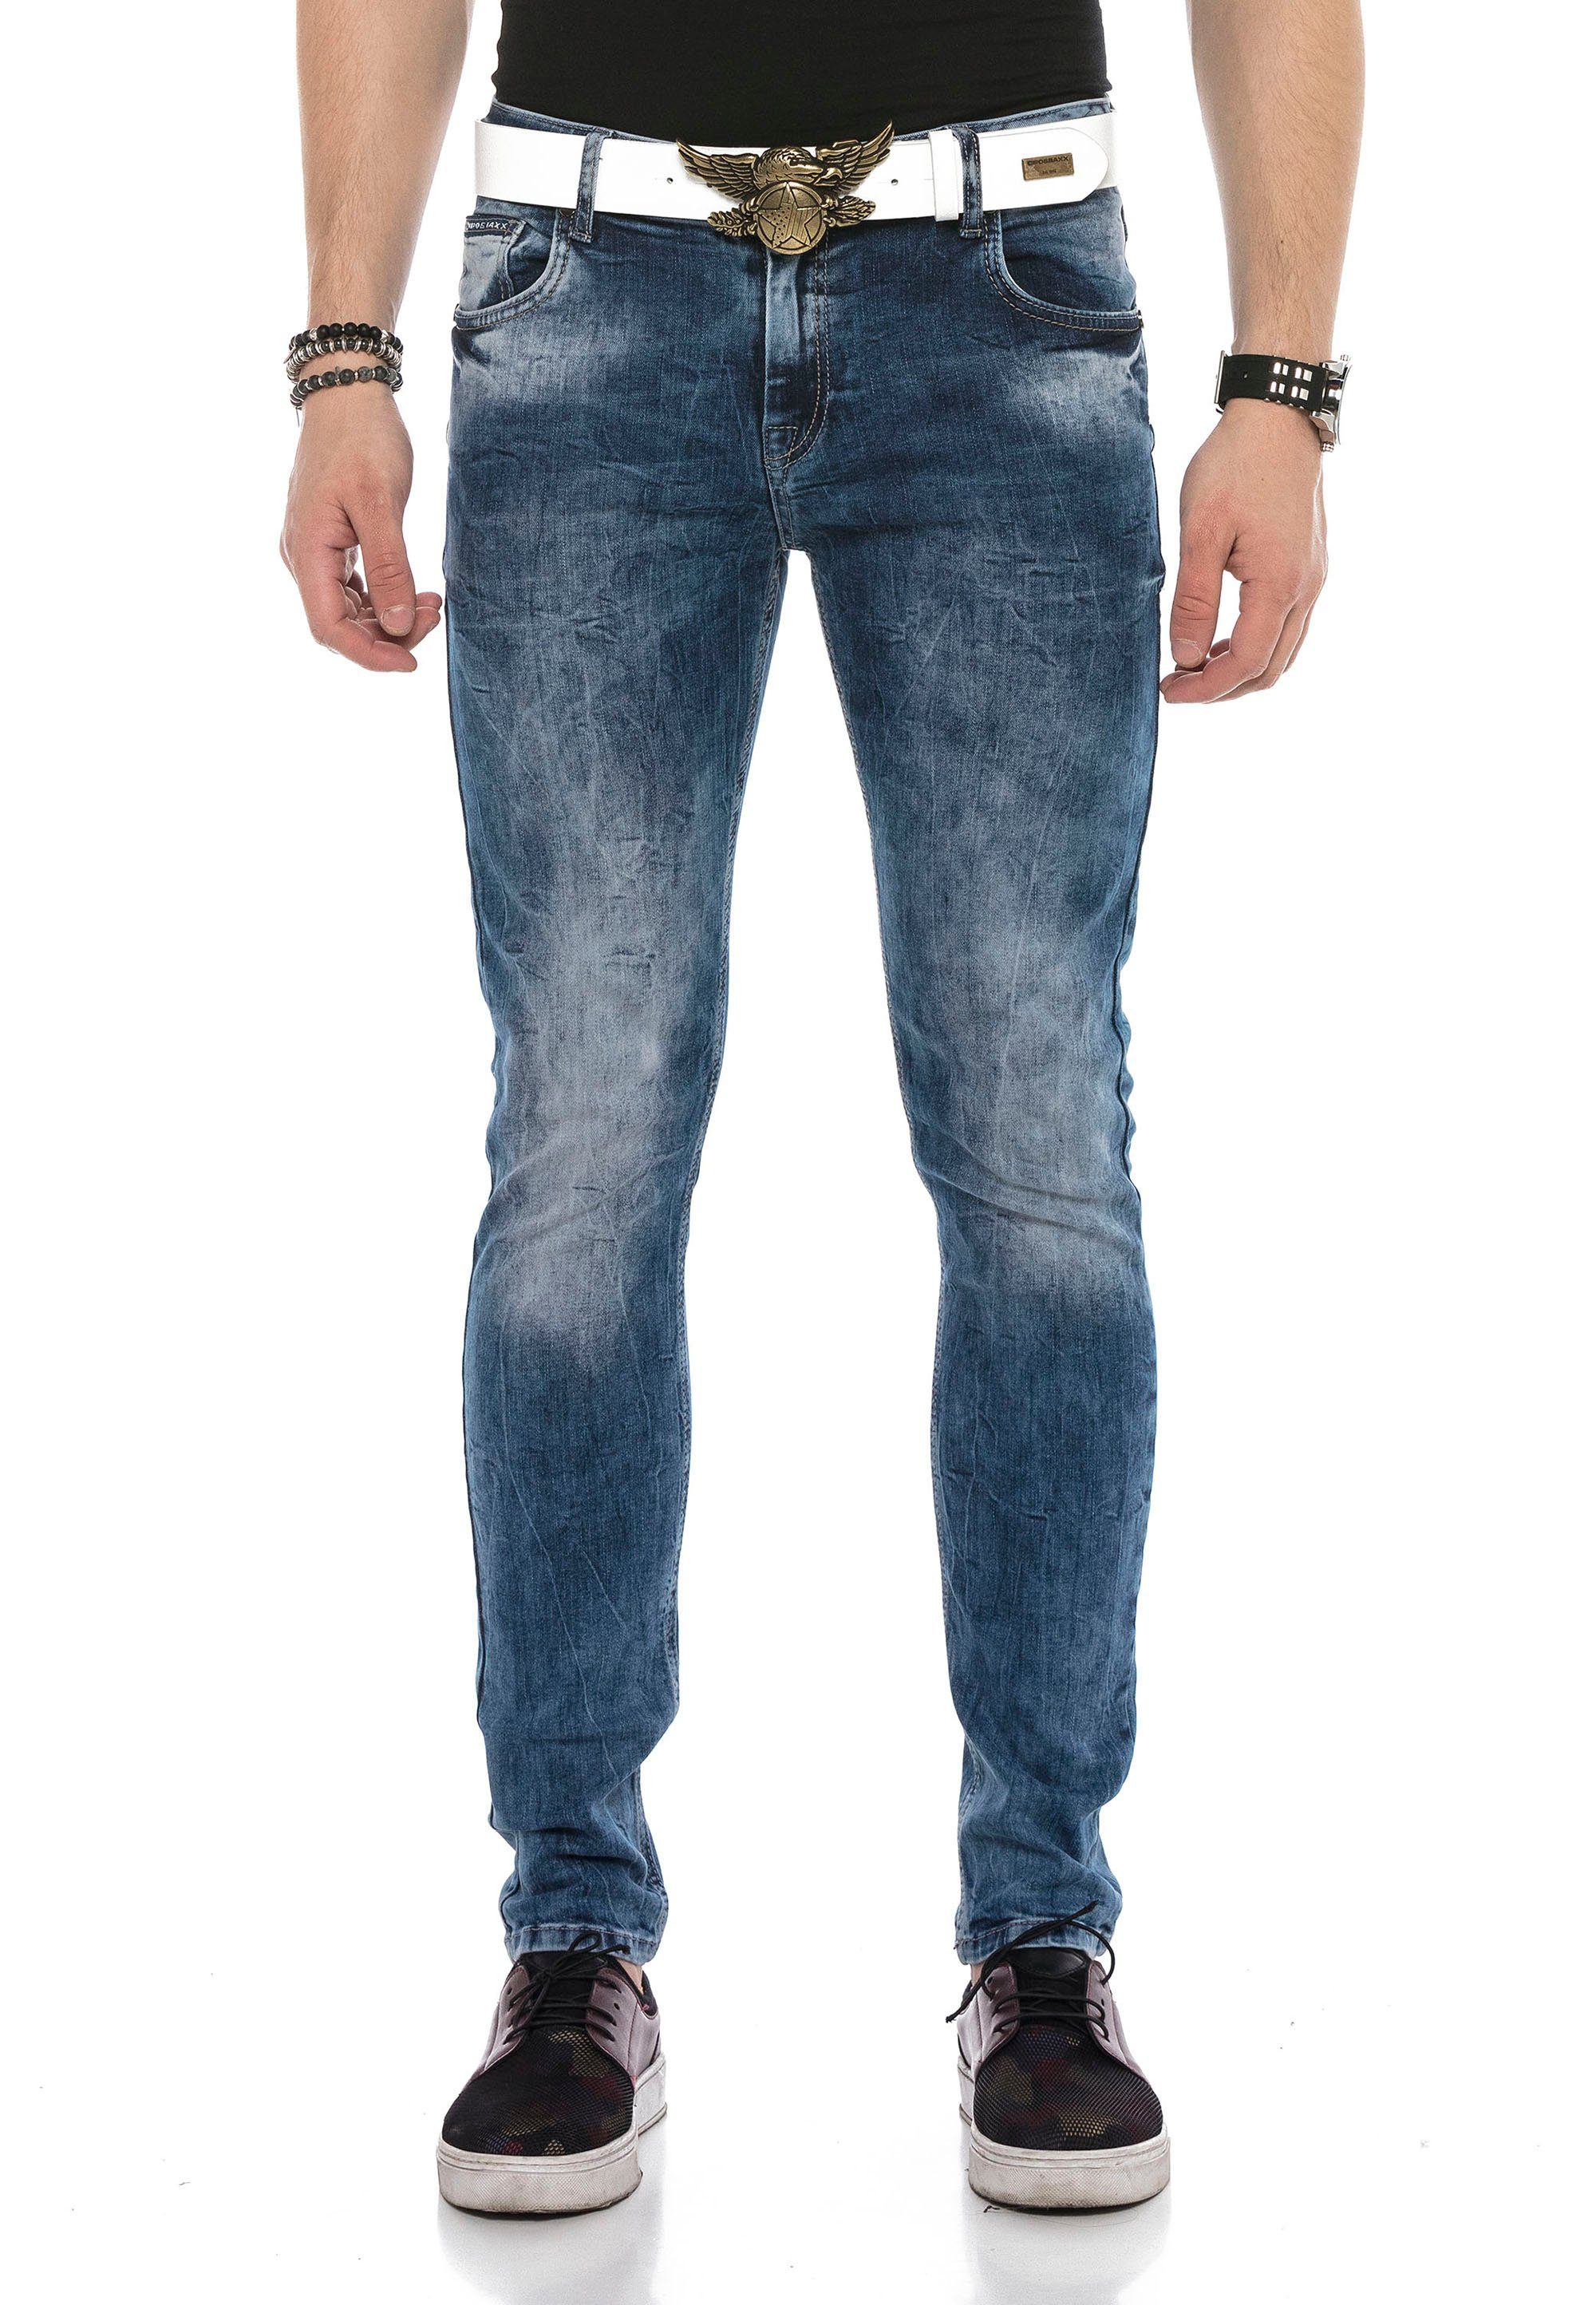 Cipo & Baxx Bequeme Jeans blau in optimaler Slim-Straight Passform Fit mit